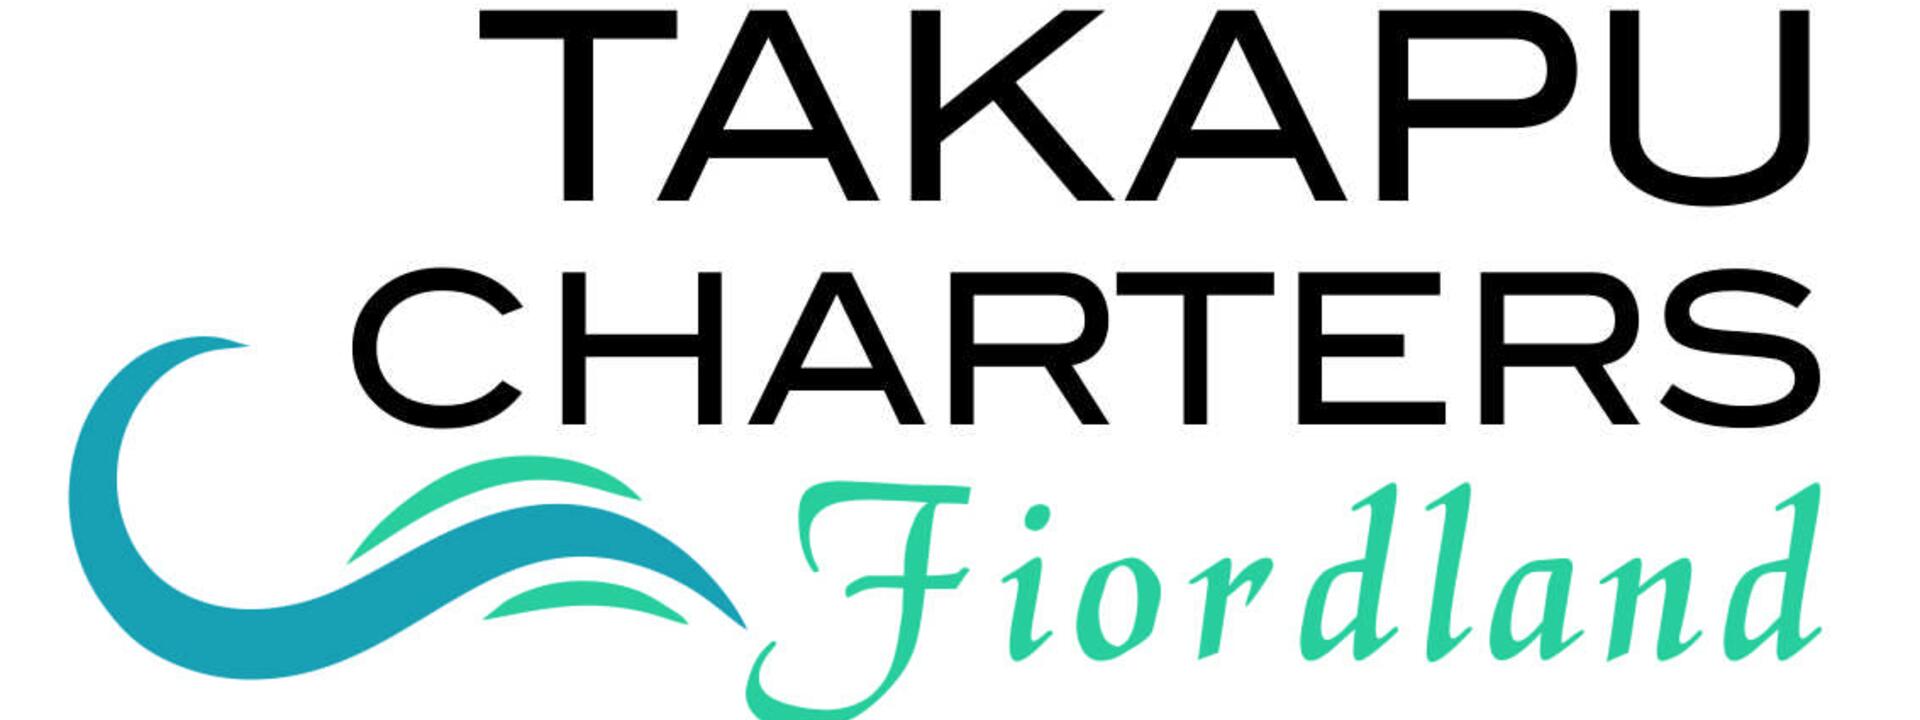 Takapu Charters logos.jpg